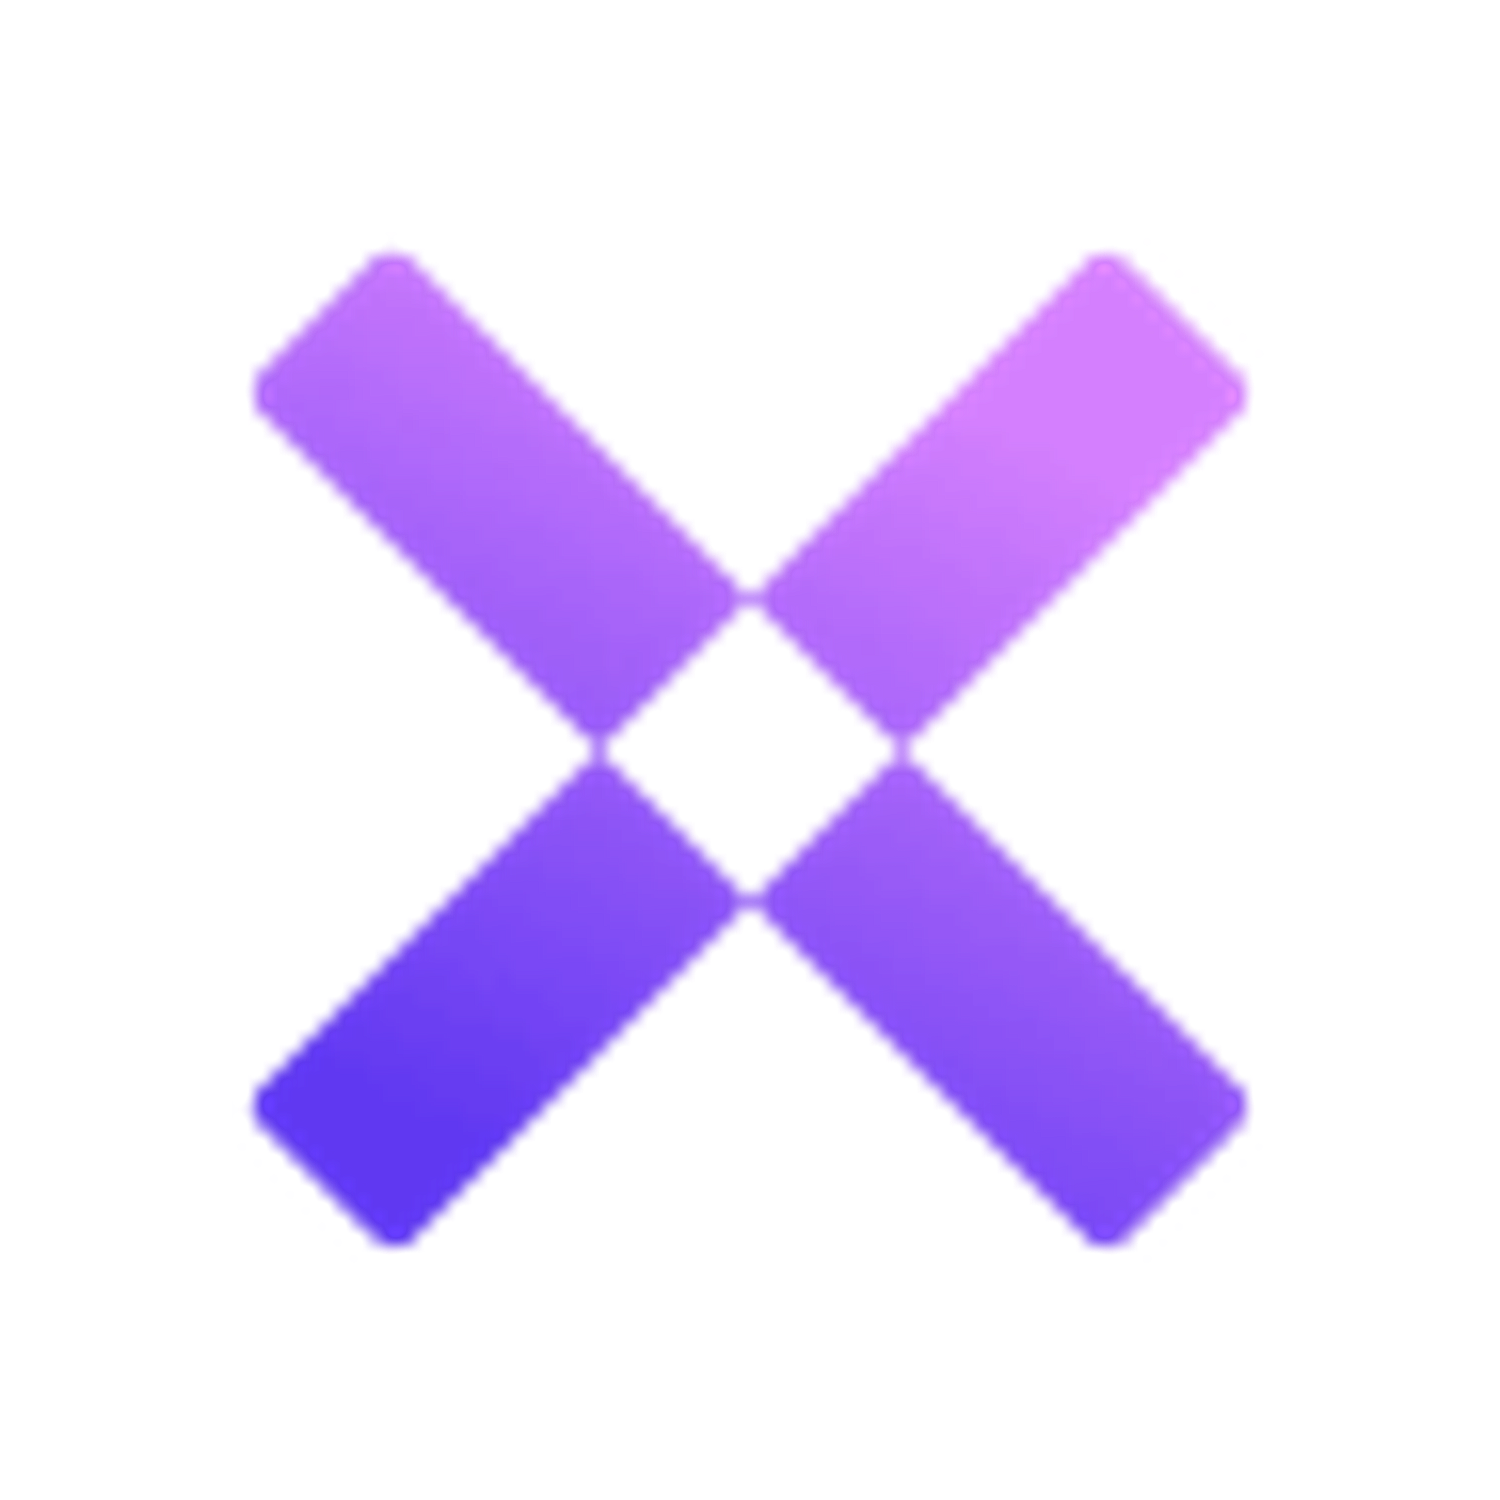 MenubarX - A powerful Mac menu bar browser